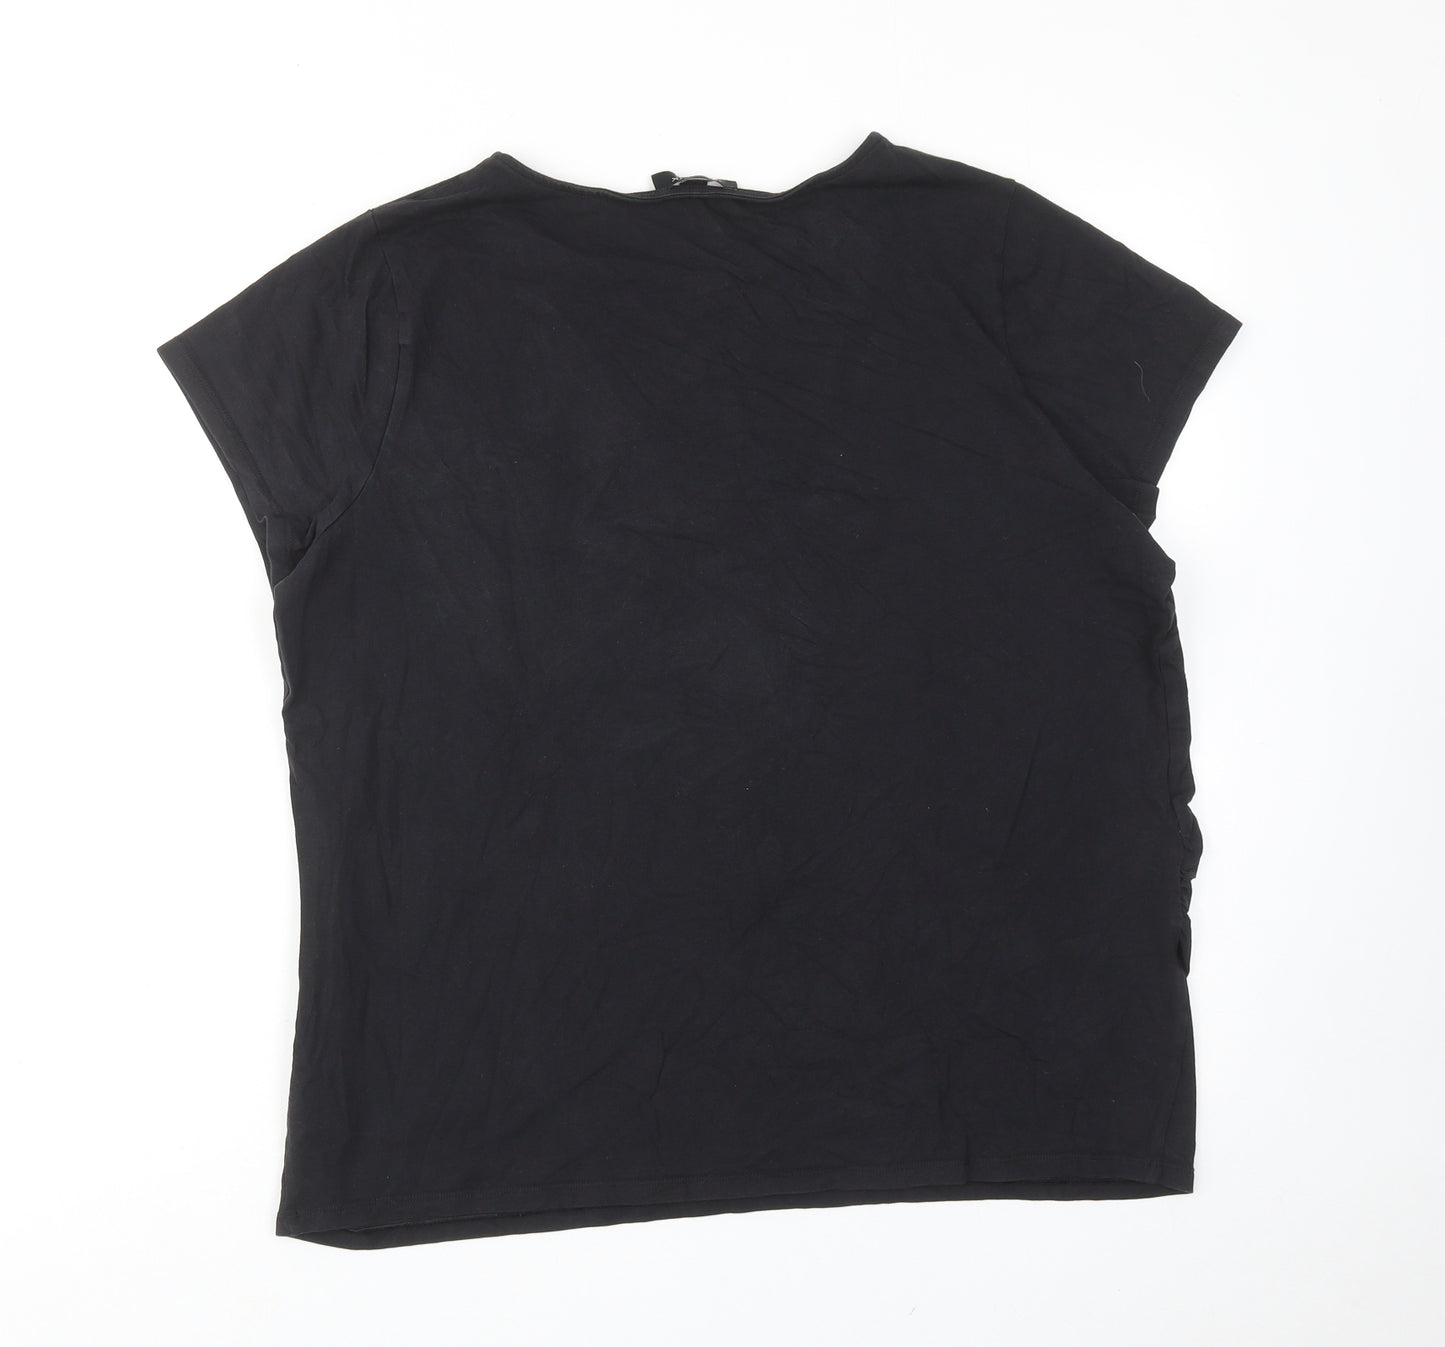 New Look Womens Black Cotton Basic T-Shirt Size 18 Round Neck